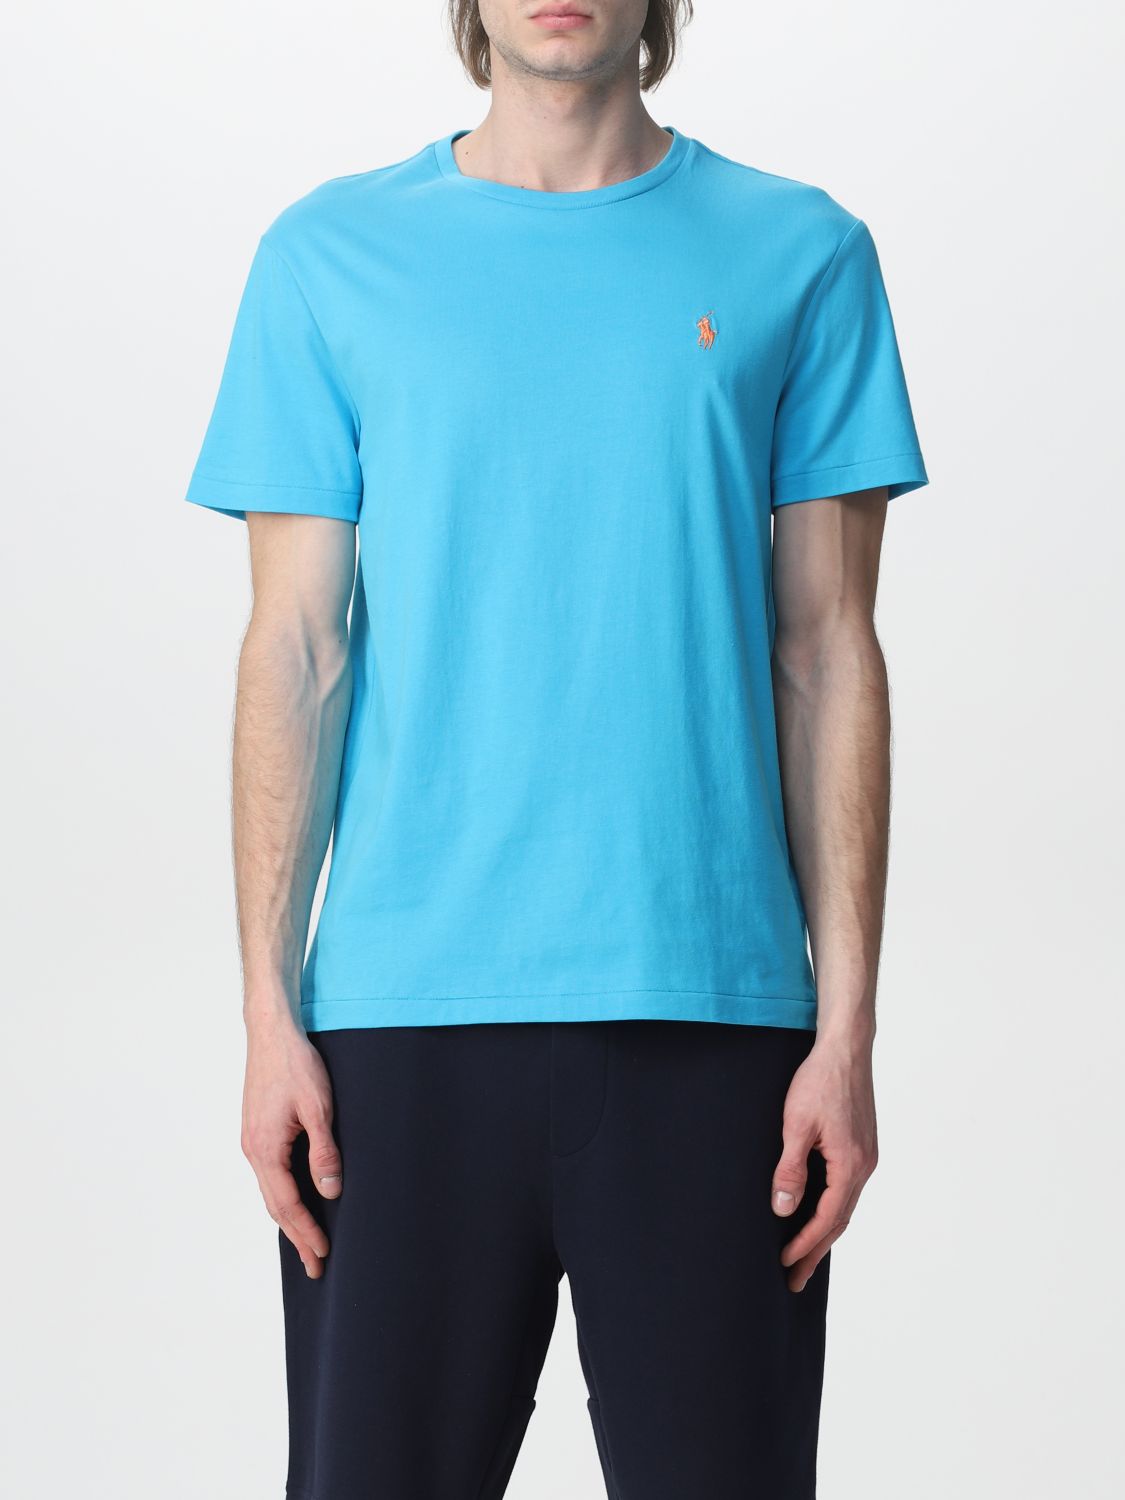 POLO RALPH LAUREN: cotton t-shirt with logo - Blue | Polo Ralph Lauren t- shirt 710671438 online on 